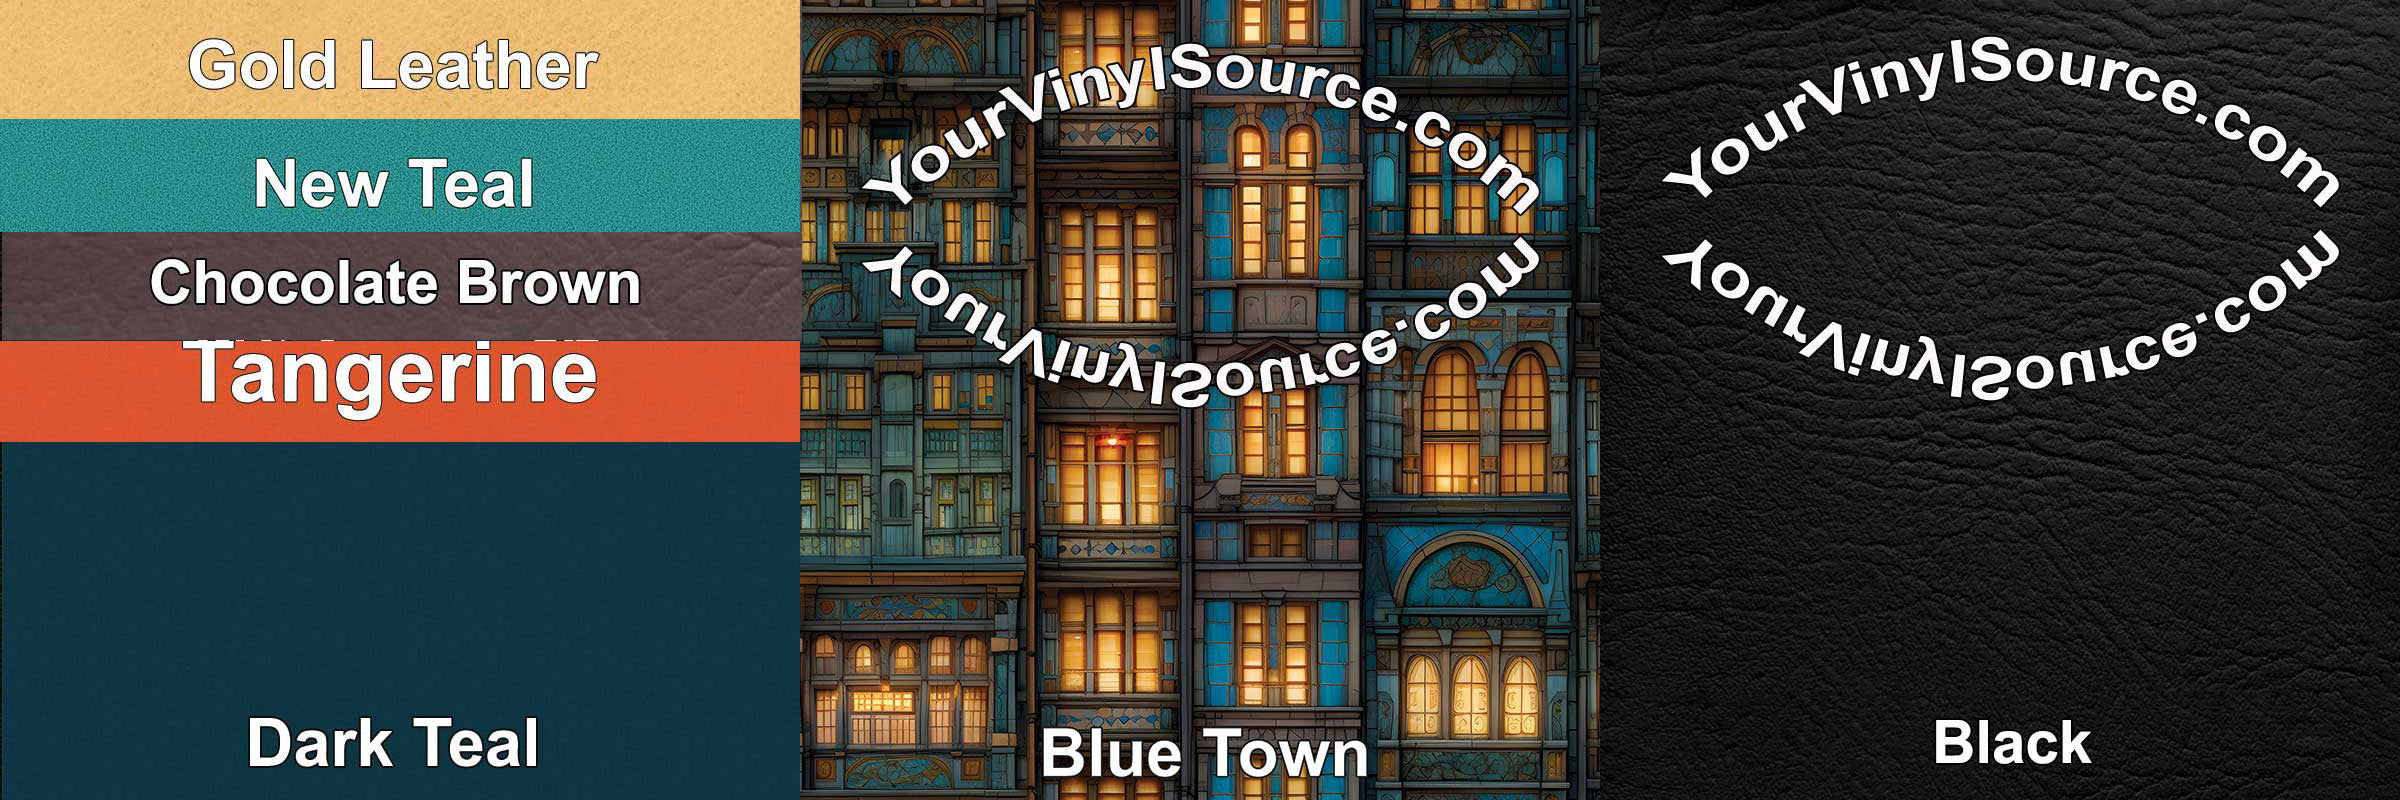 Blue Town 2 sizes